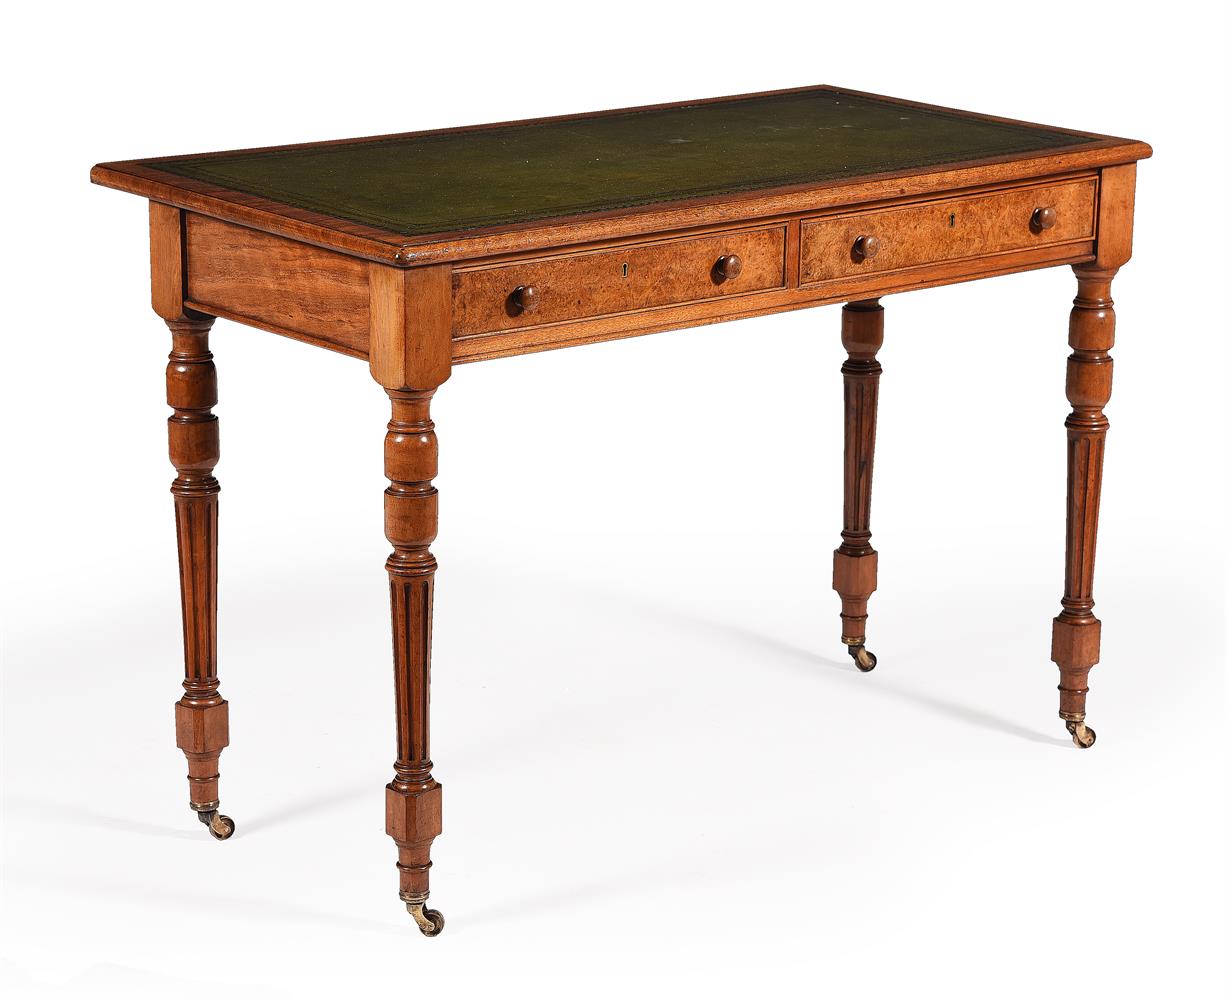 A Victorian walnut writing table